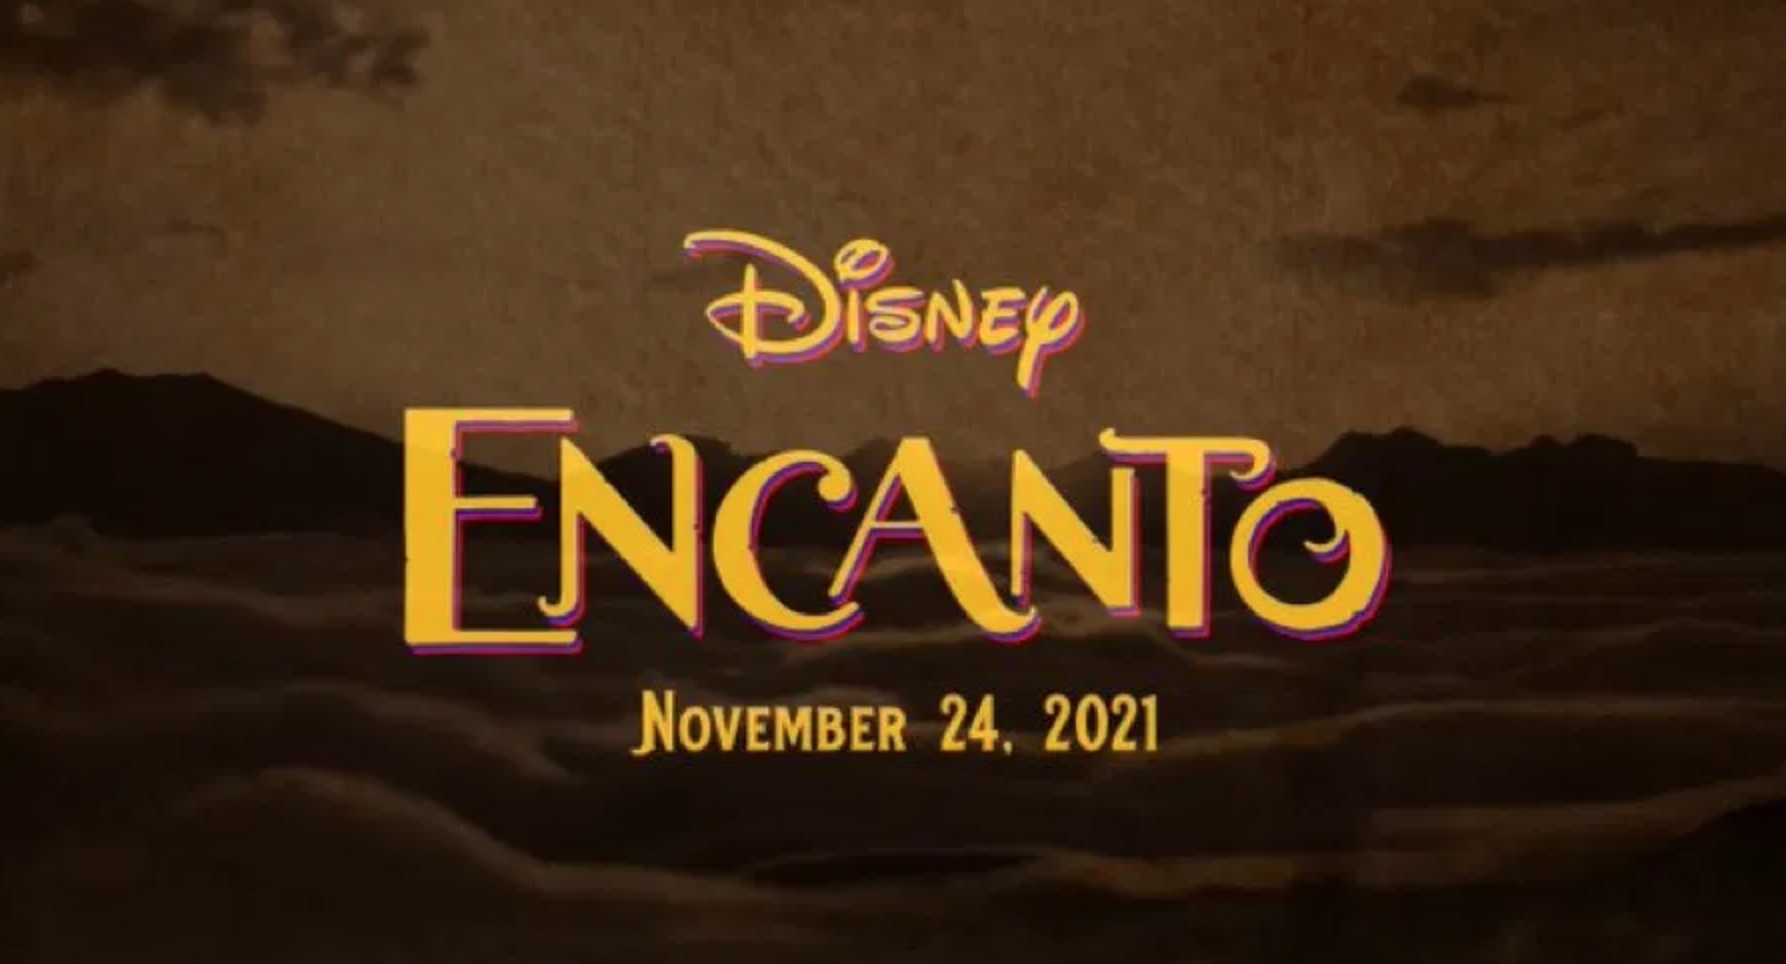 Lin Manuel Miranda Shares Details About Disney's Upcoming Film, 'Encanto'